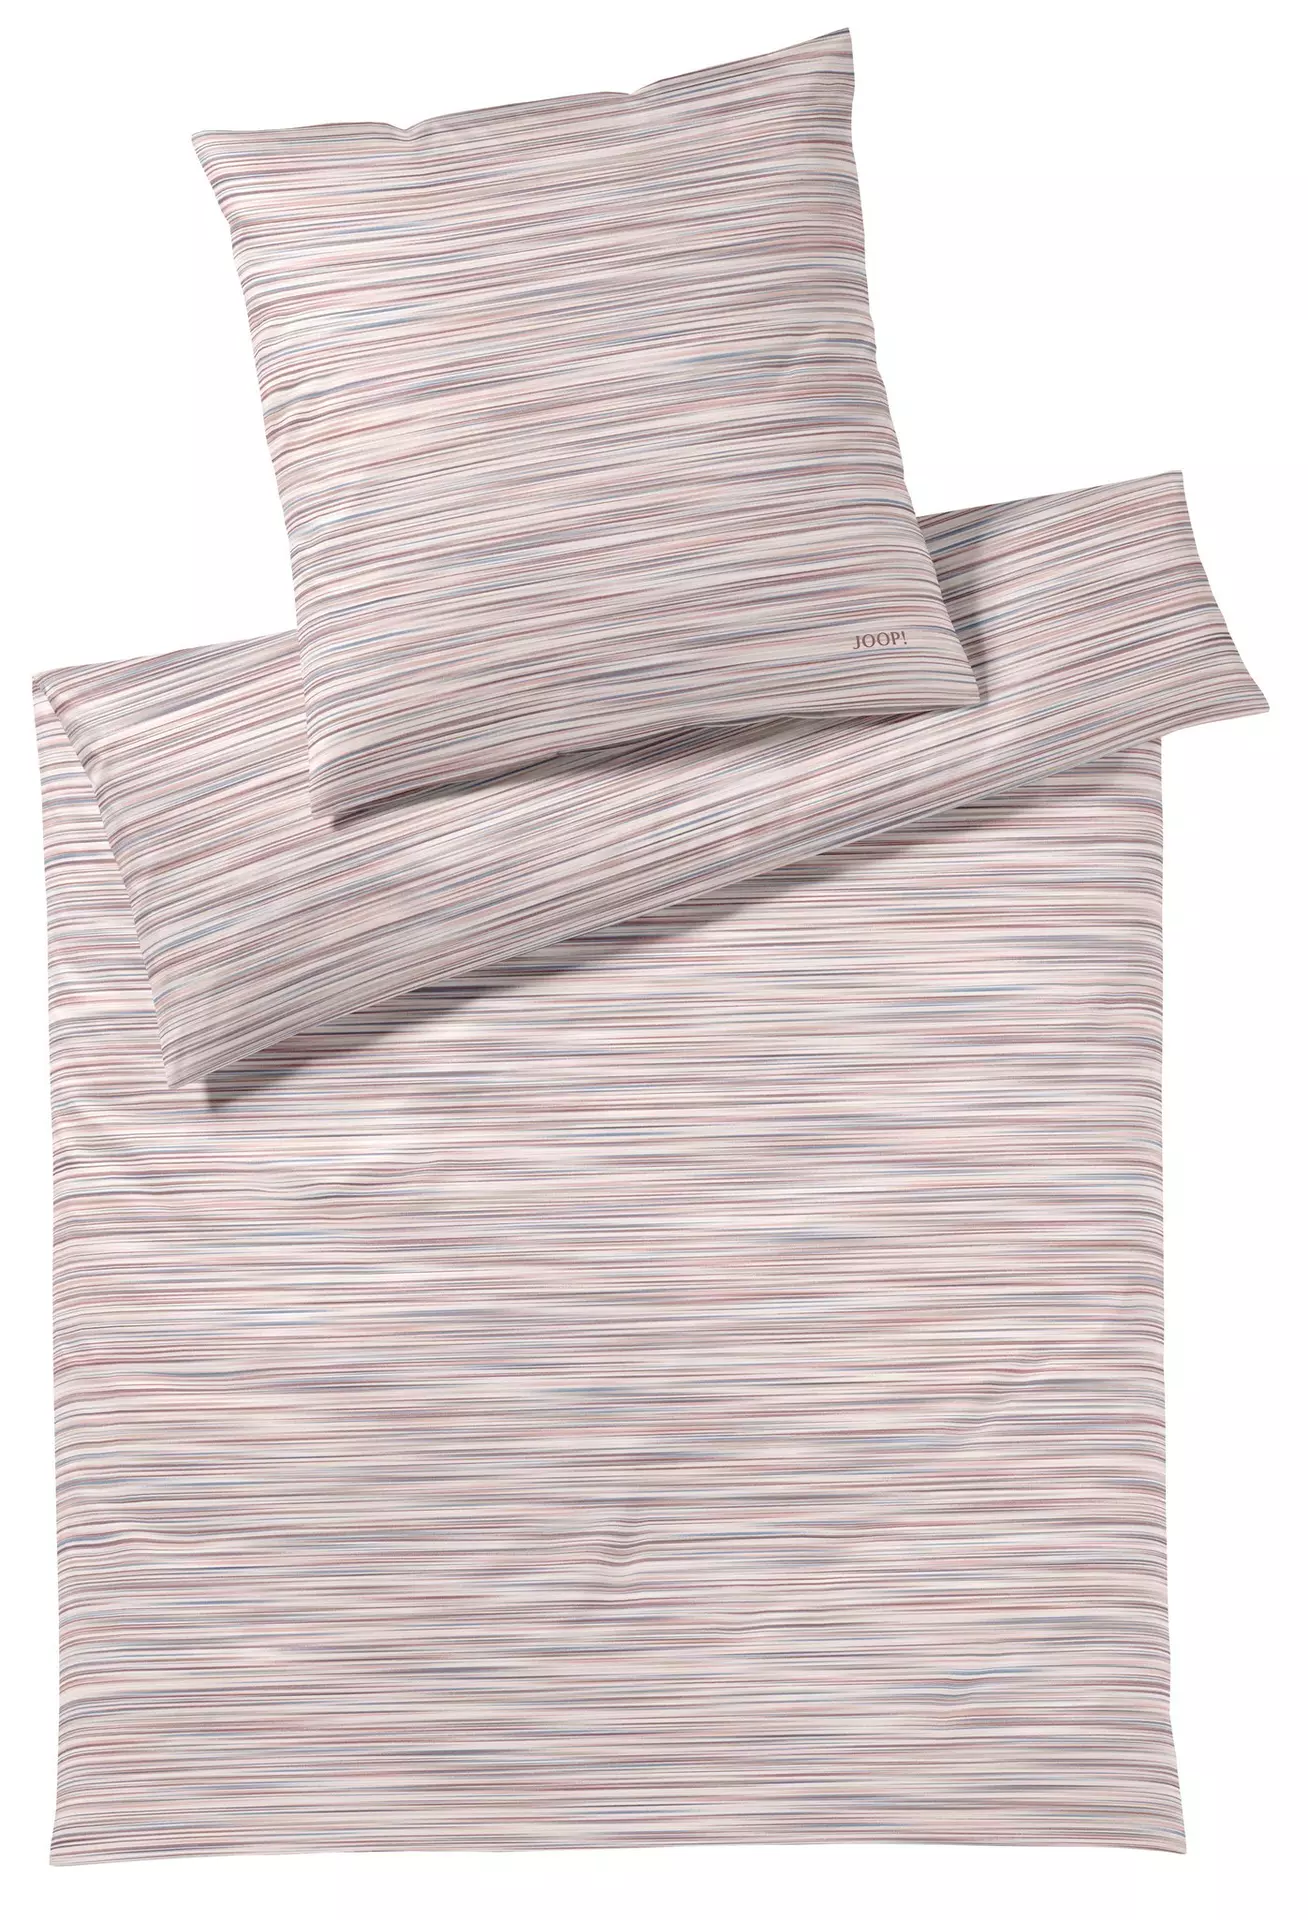 Satin-Bettwäsche Vivid JOOP Textil 135 x 200 cm